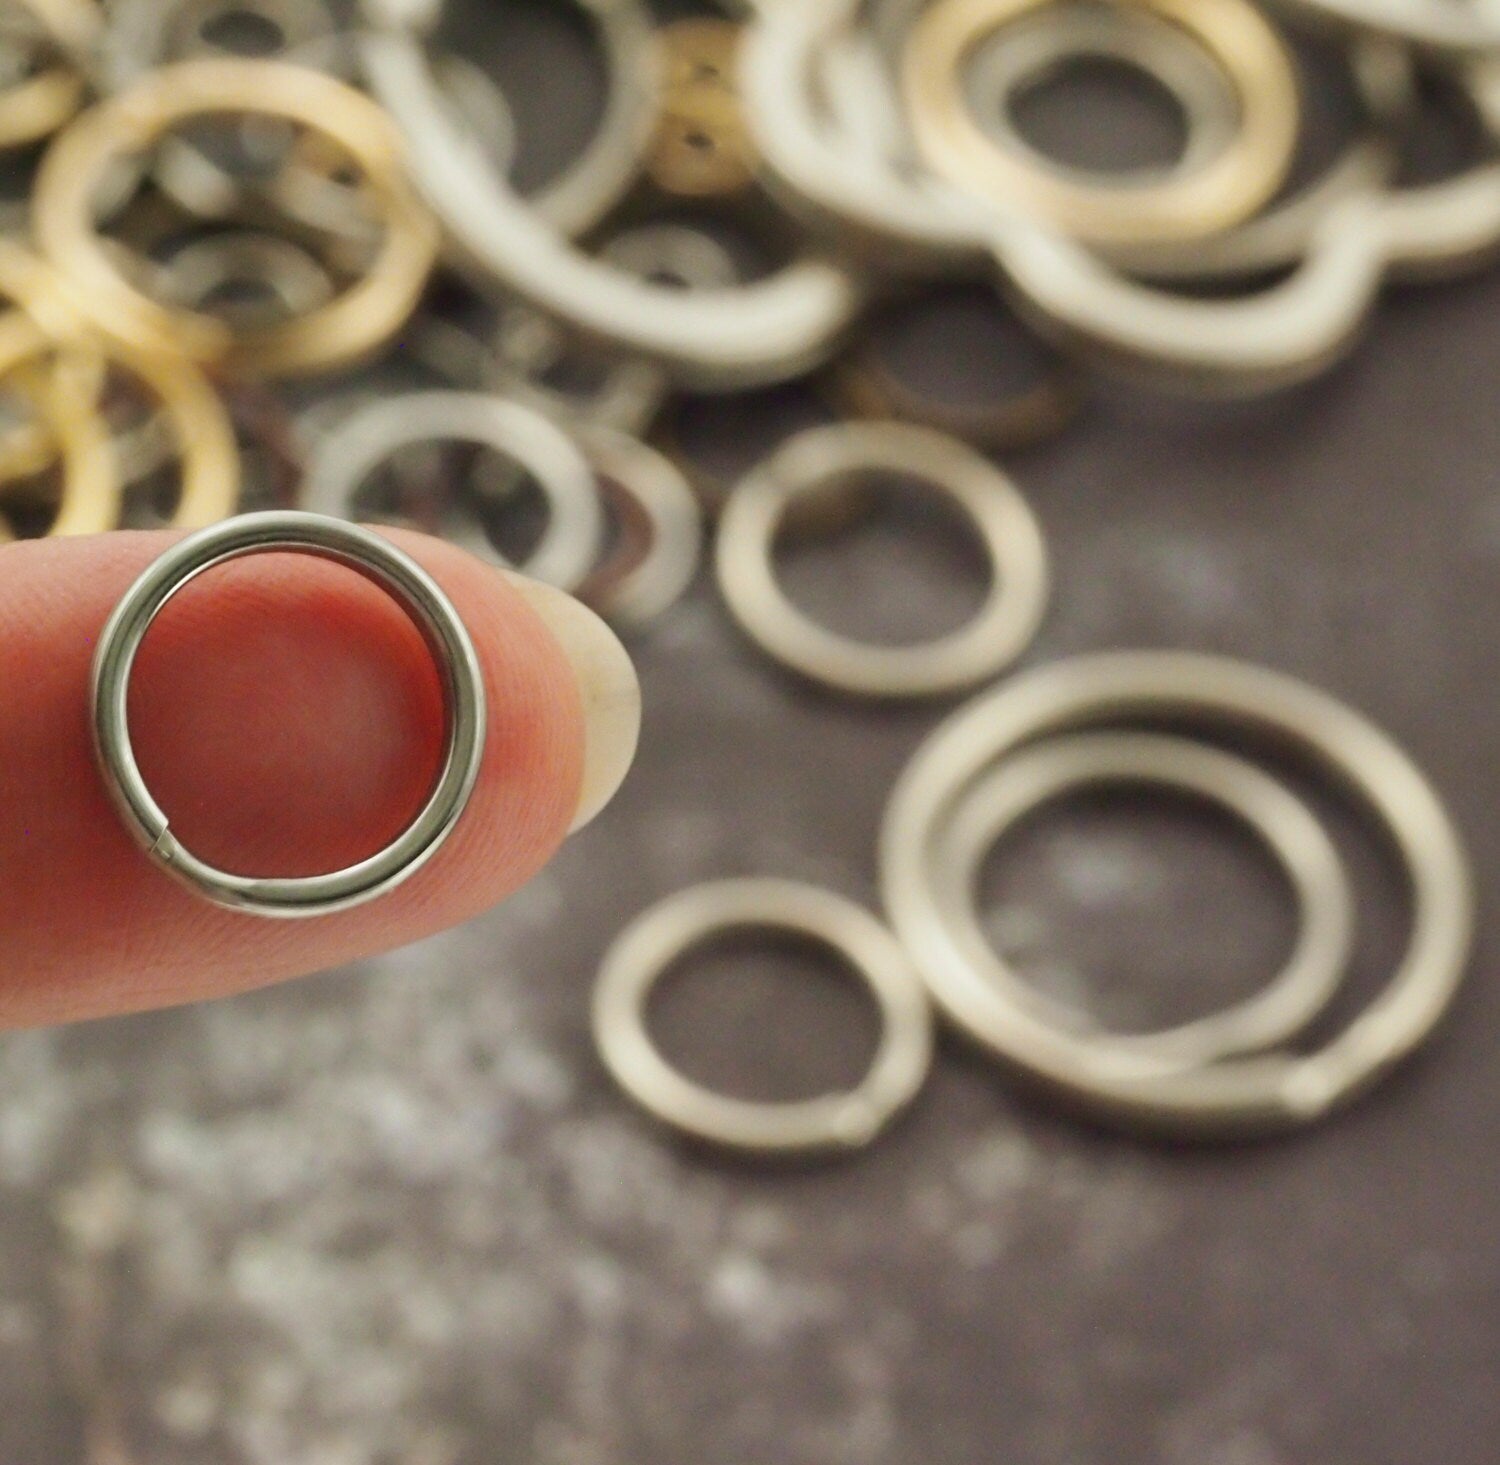 9/16 small key rings 15mm split